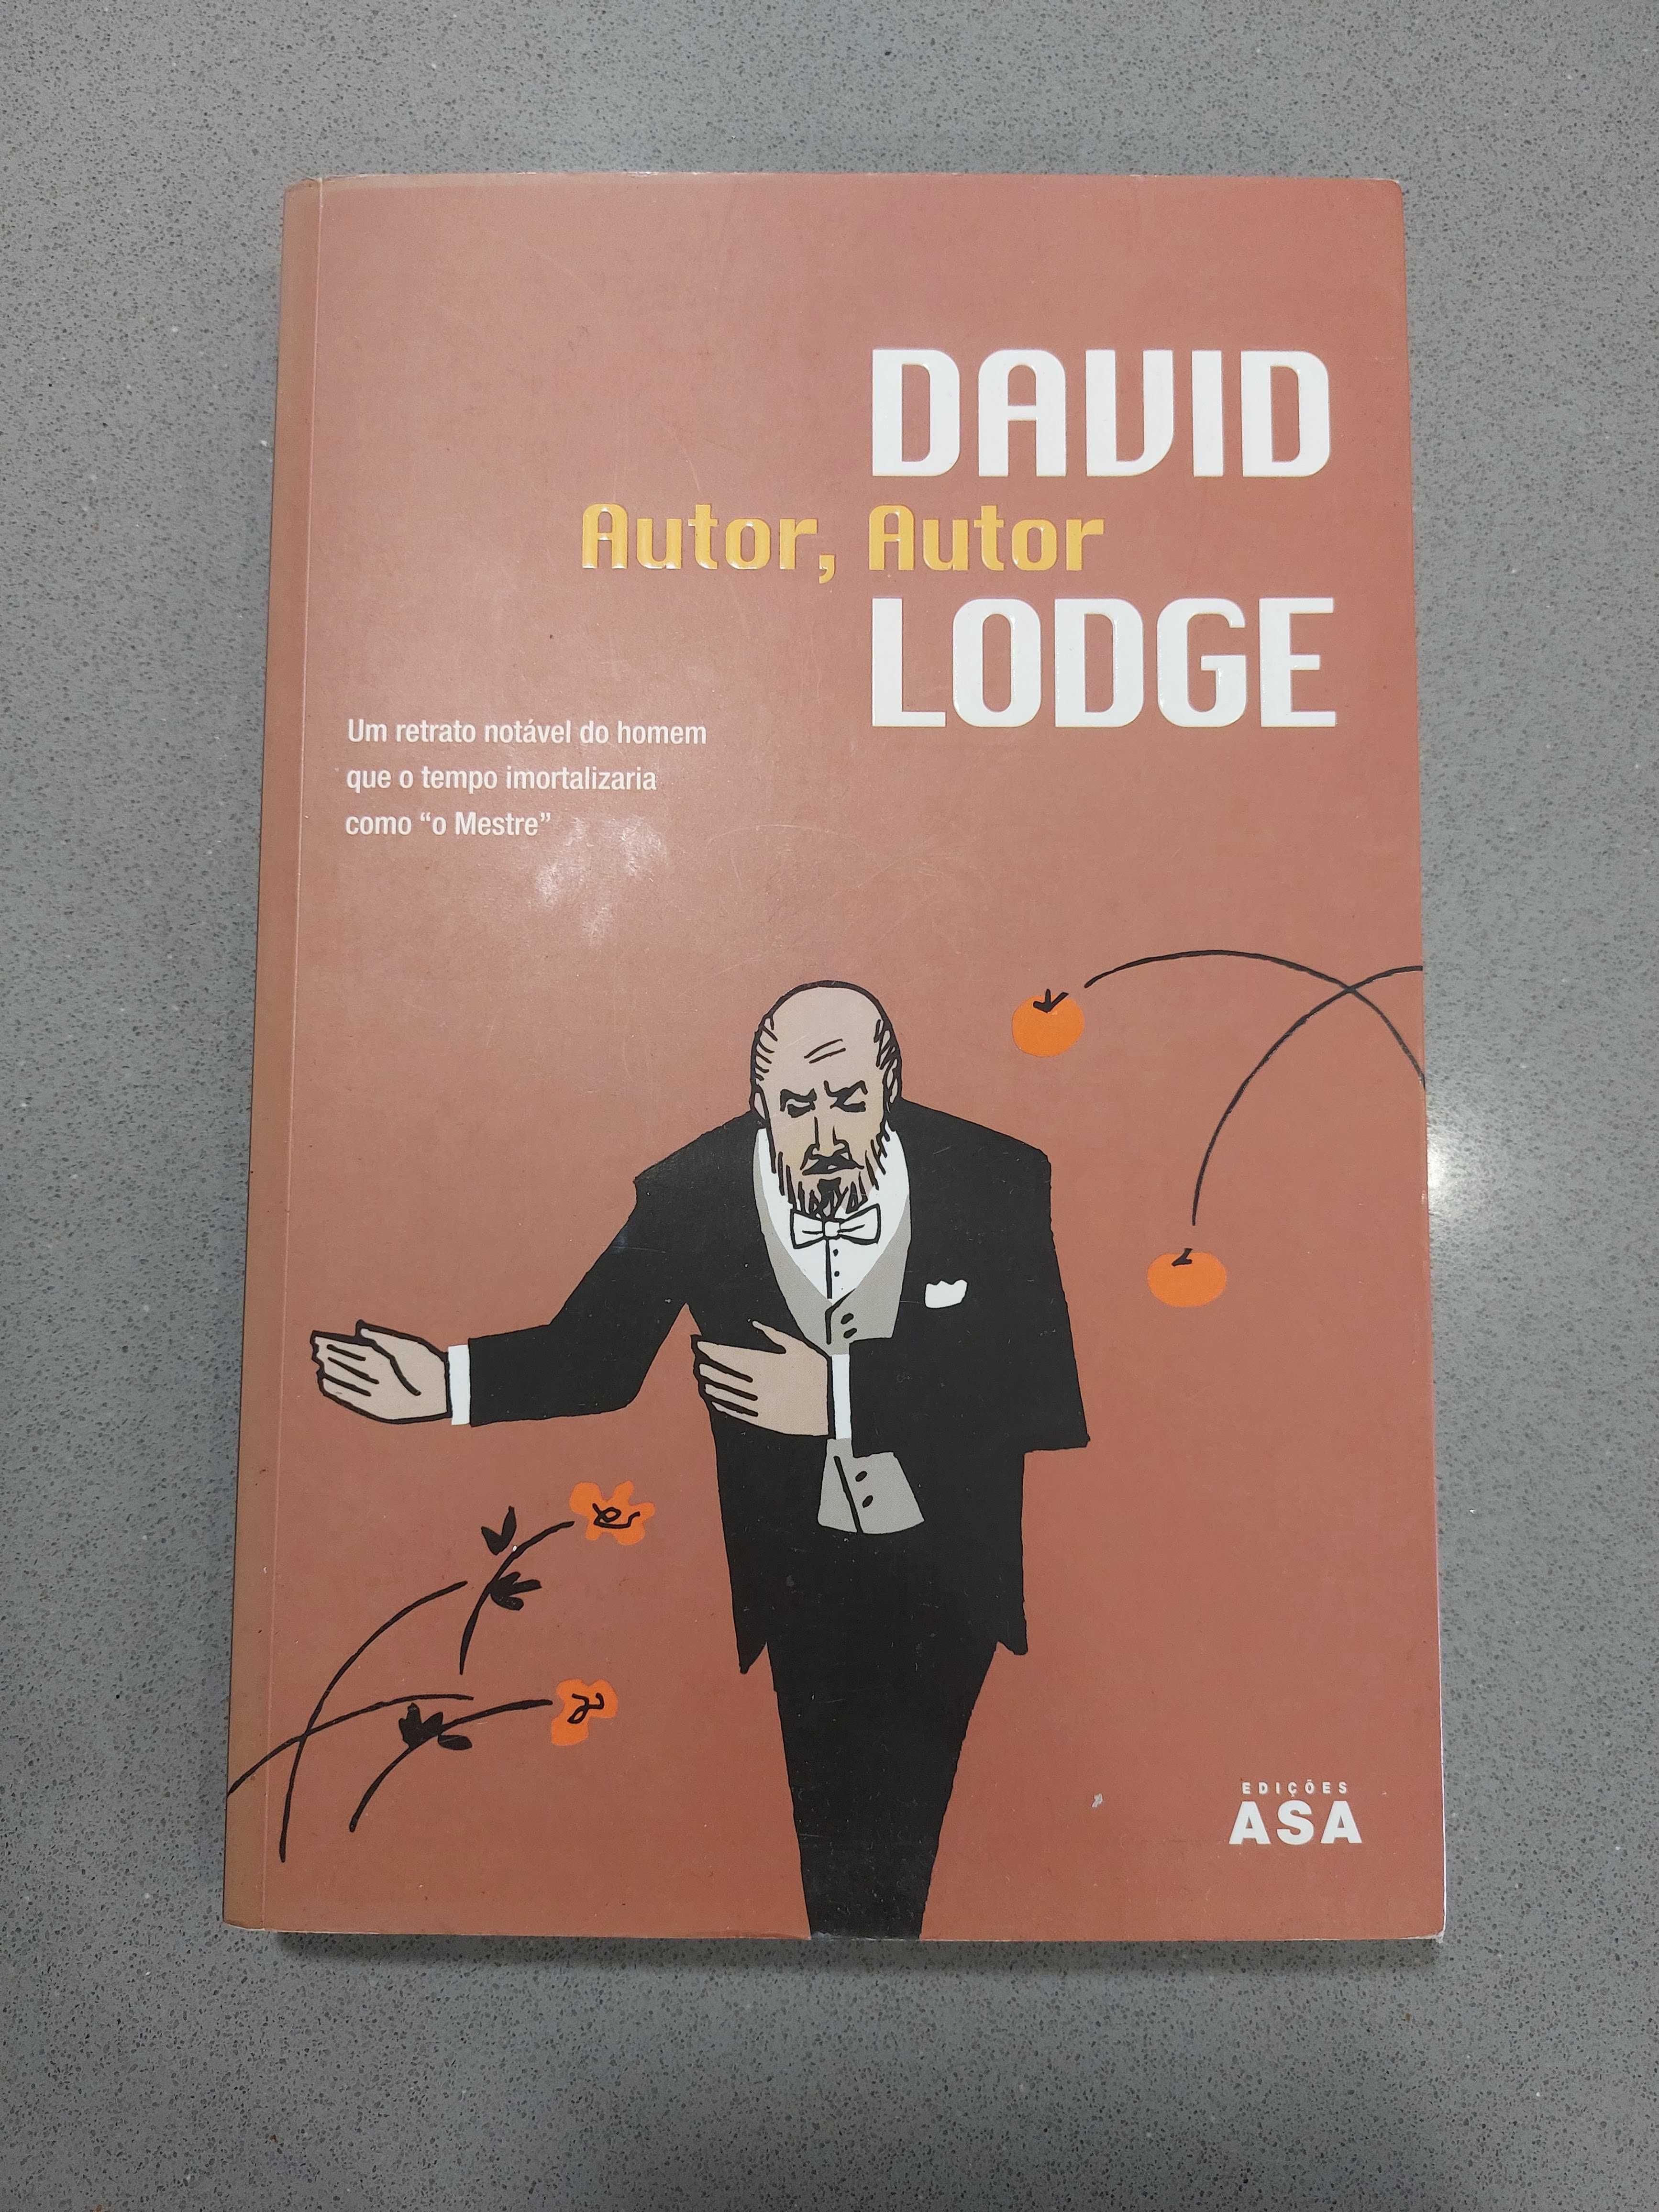 David Lodge - Autor, Autor (PORTES GRATIS)